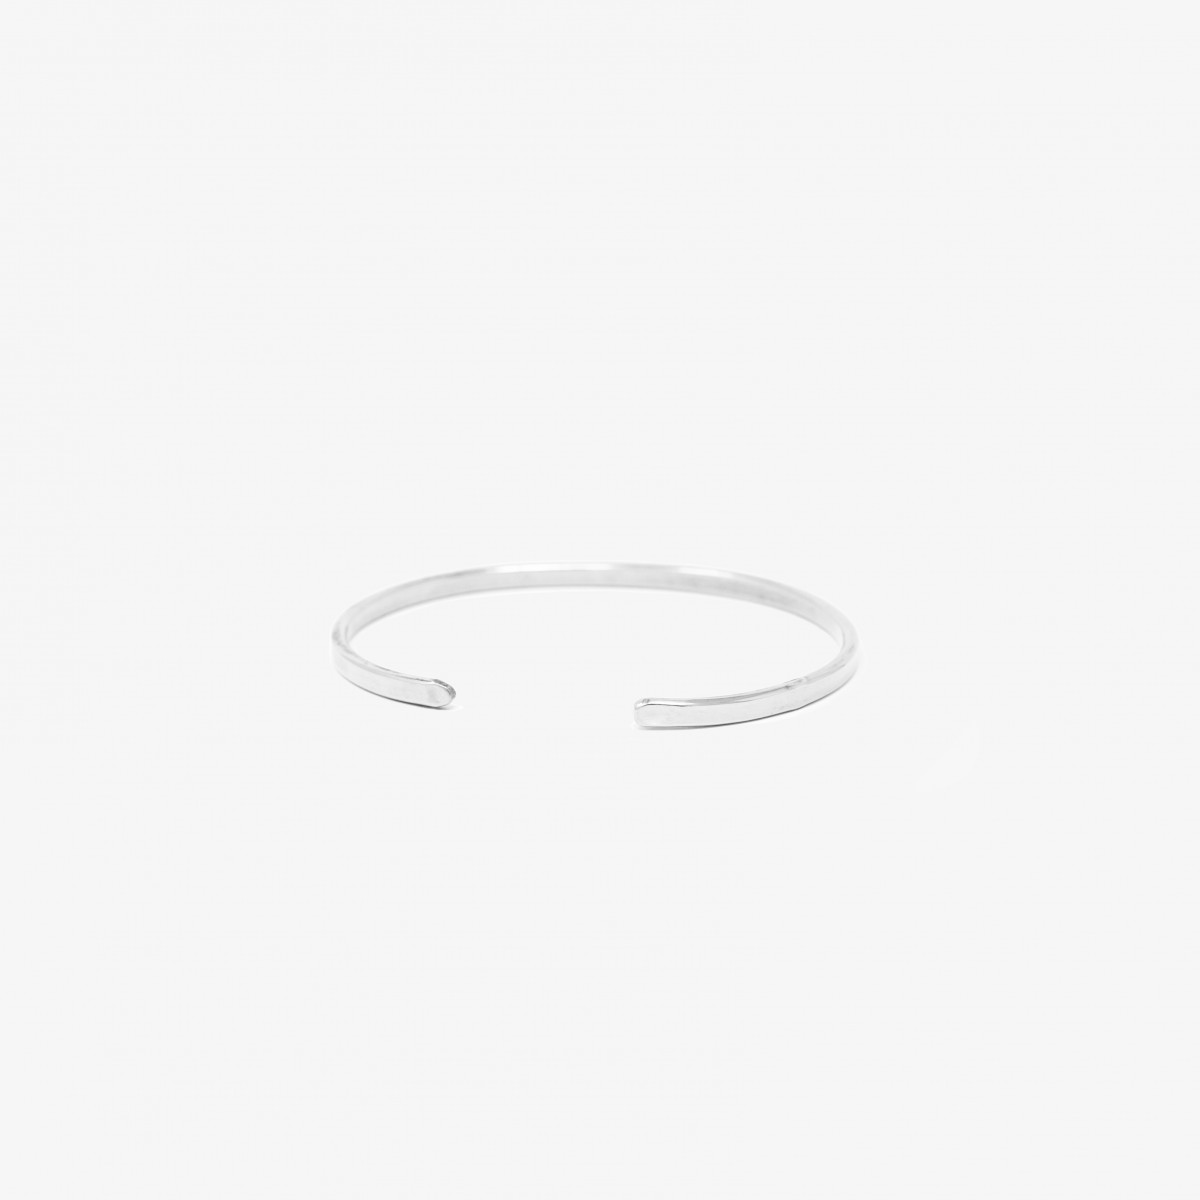 Lois Mathar – Armband Edelstahl, schmal, 3,5 mm